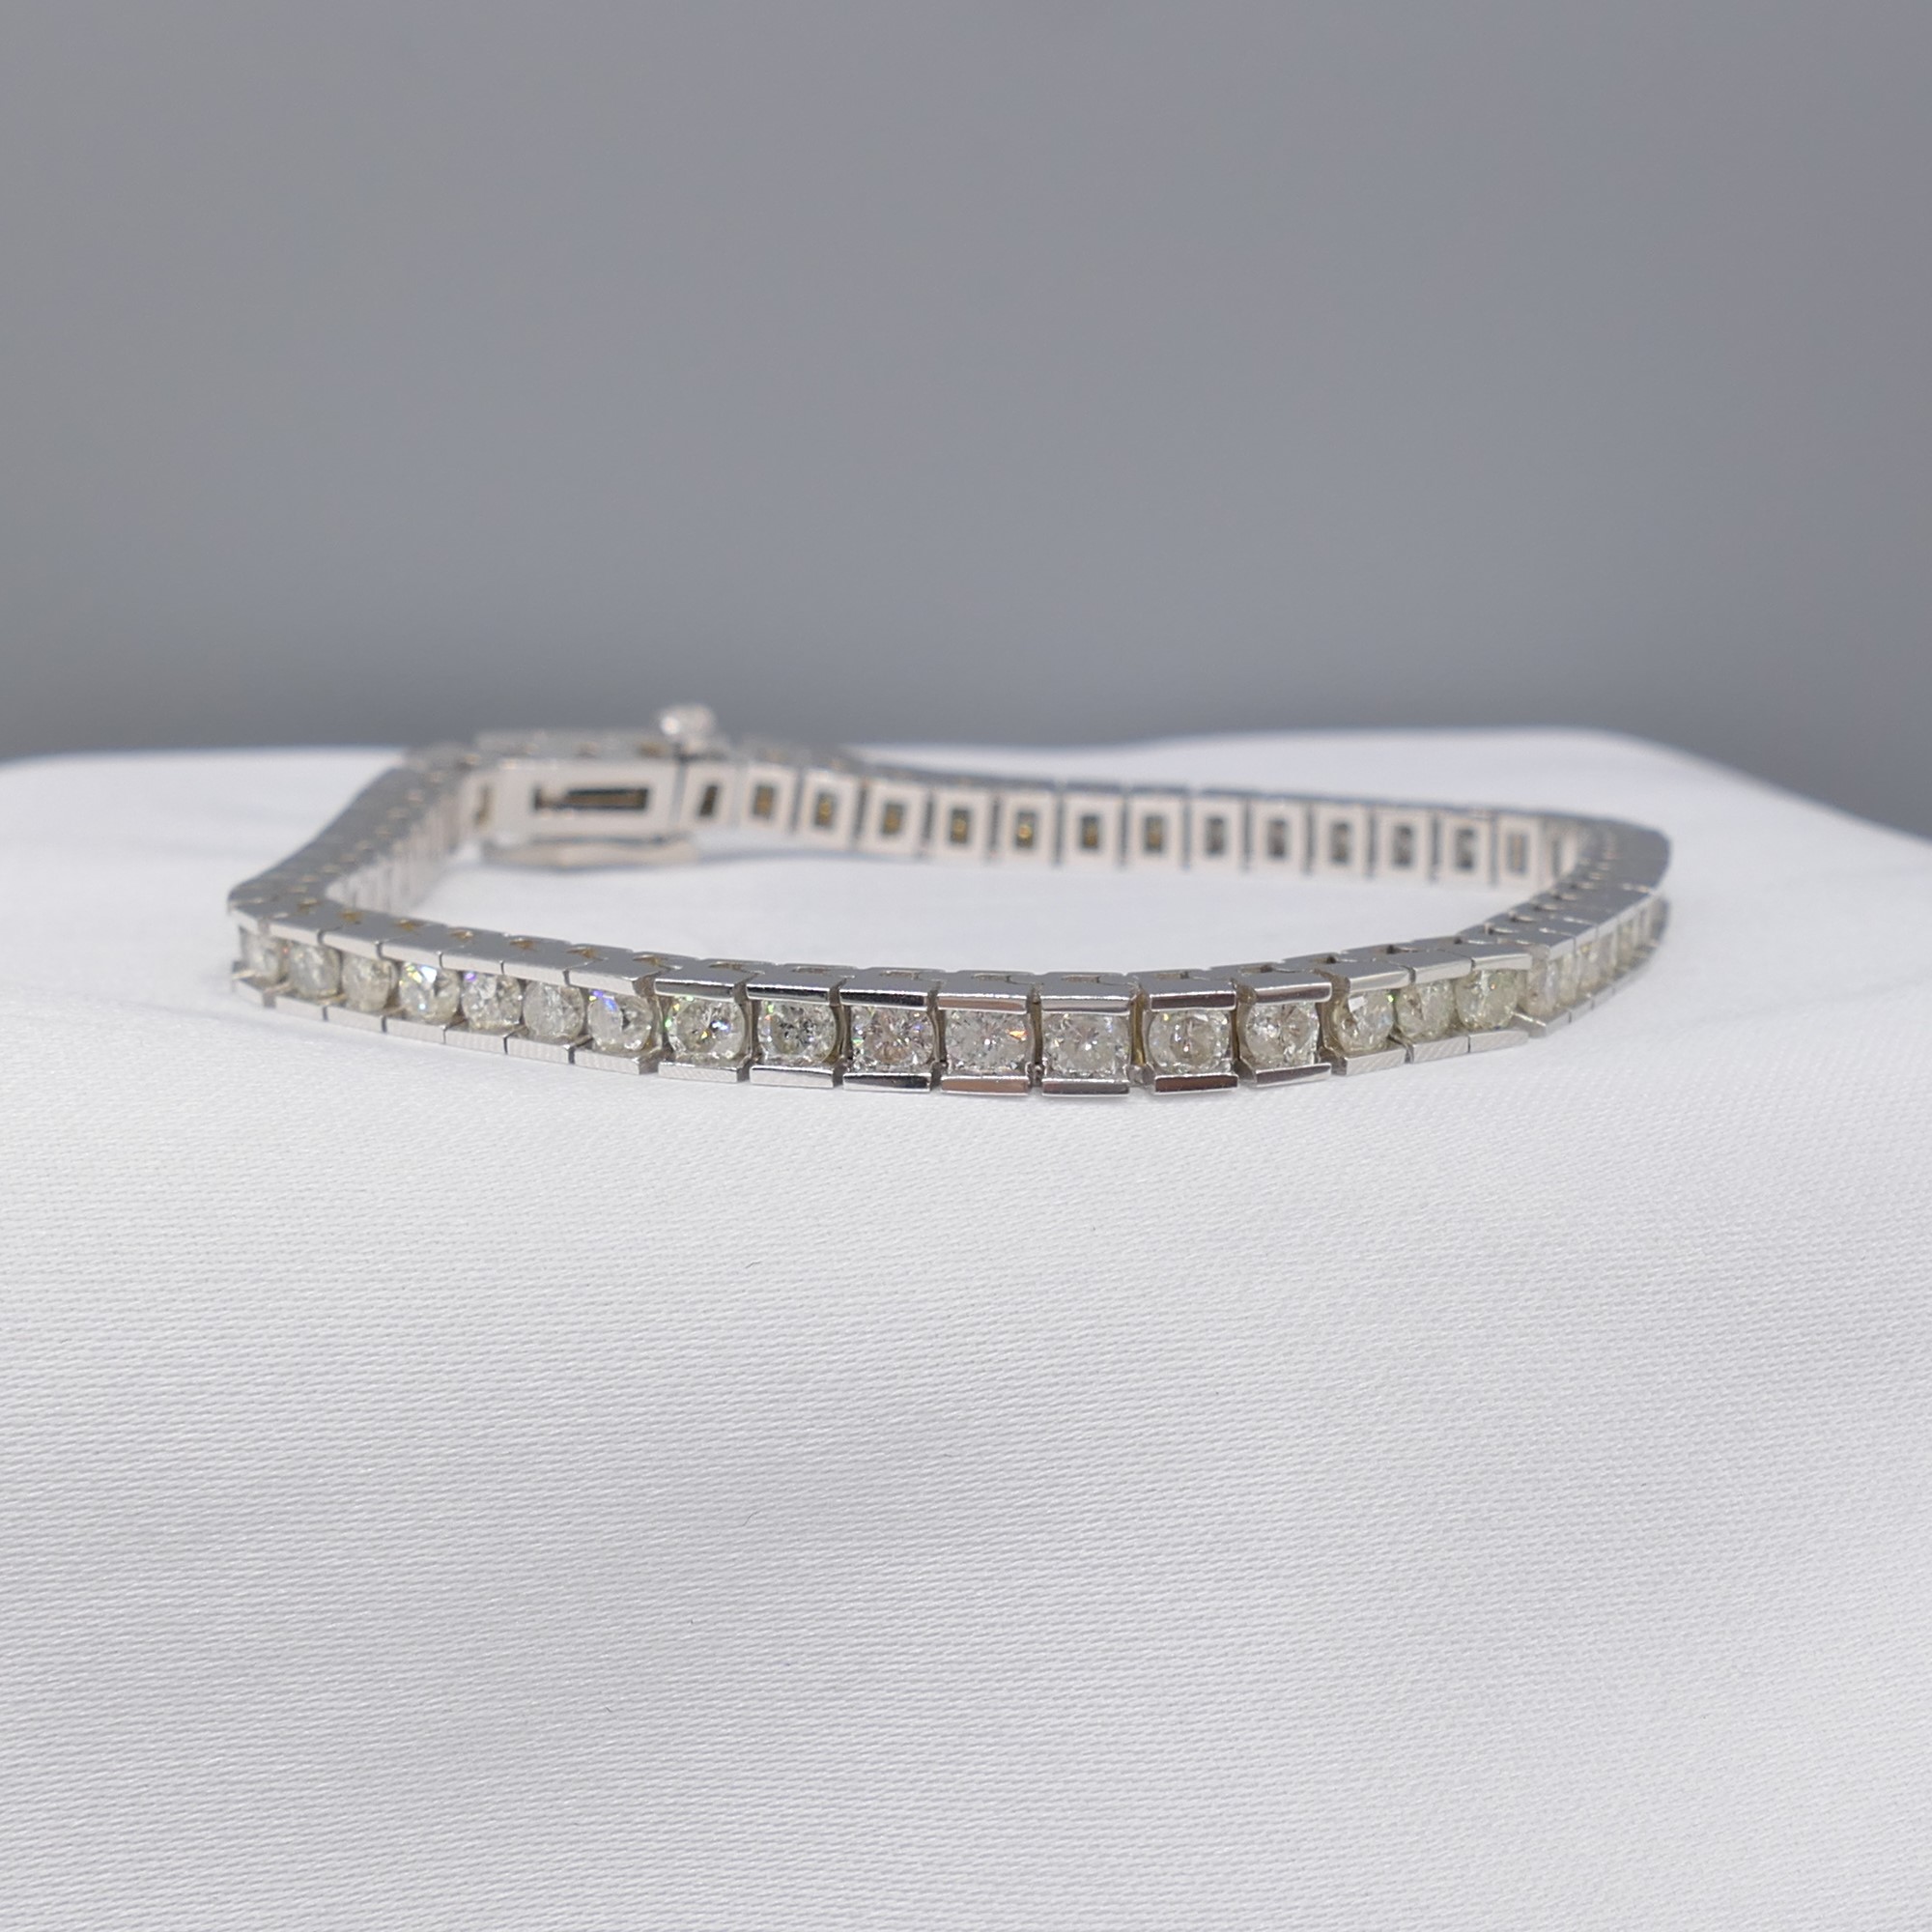 4.85 Carat Round Brilliant-Cut Diamond Bracelet In 14K White Gold - Image 3 of 8